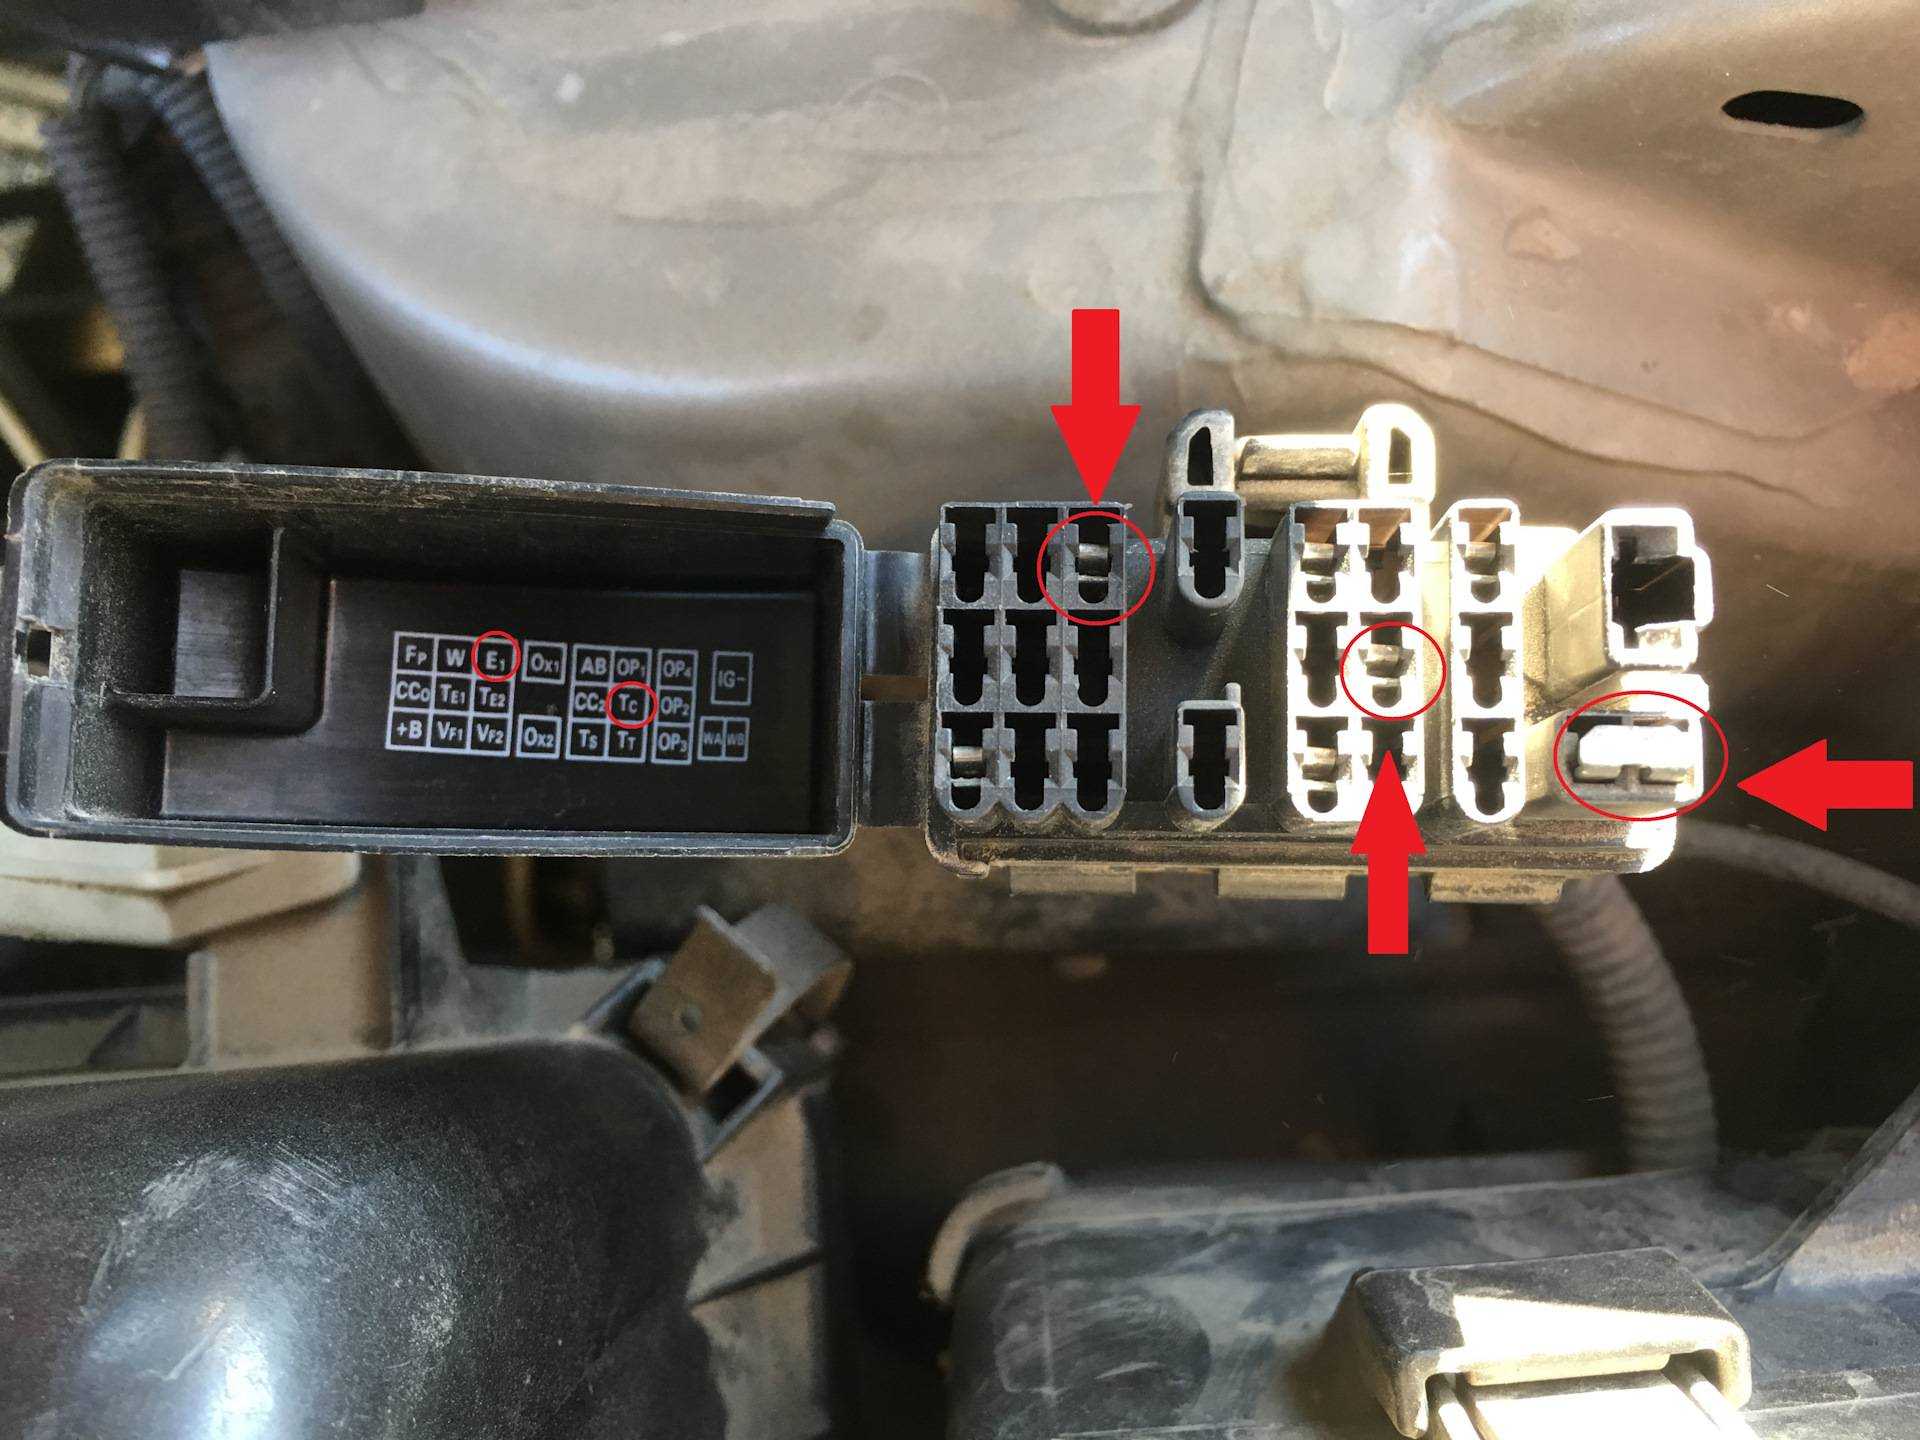 Toyota camry repair manuals | free online auto repair manuals and wiring diagrams